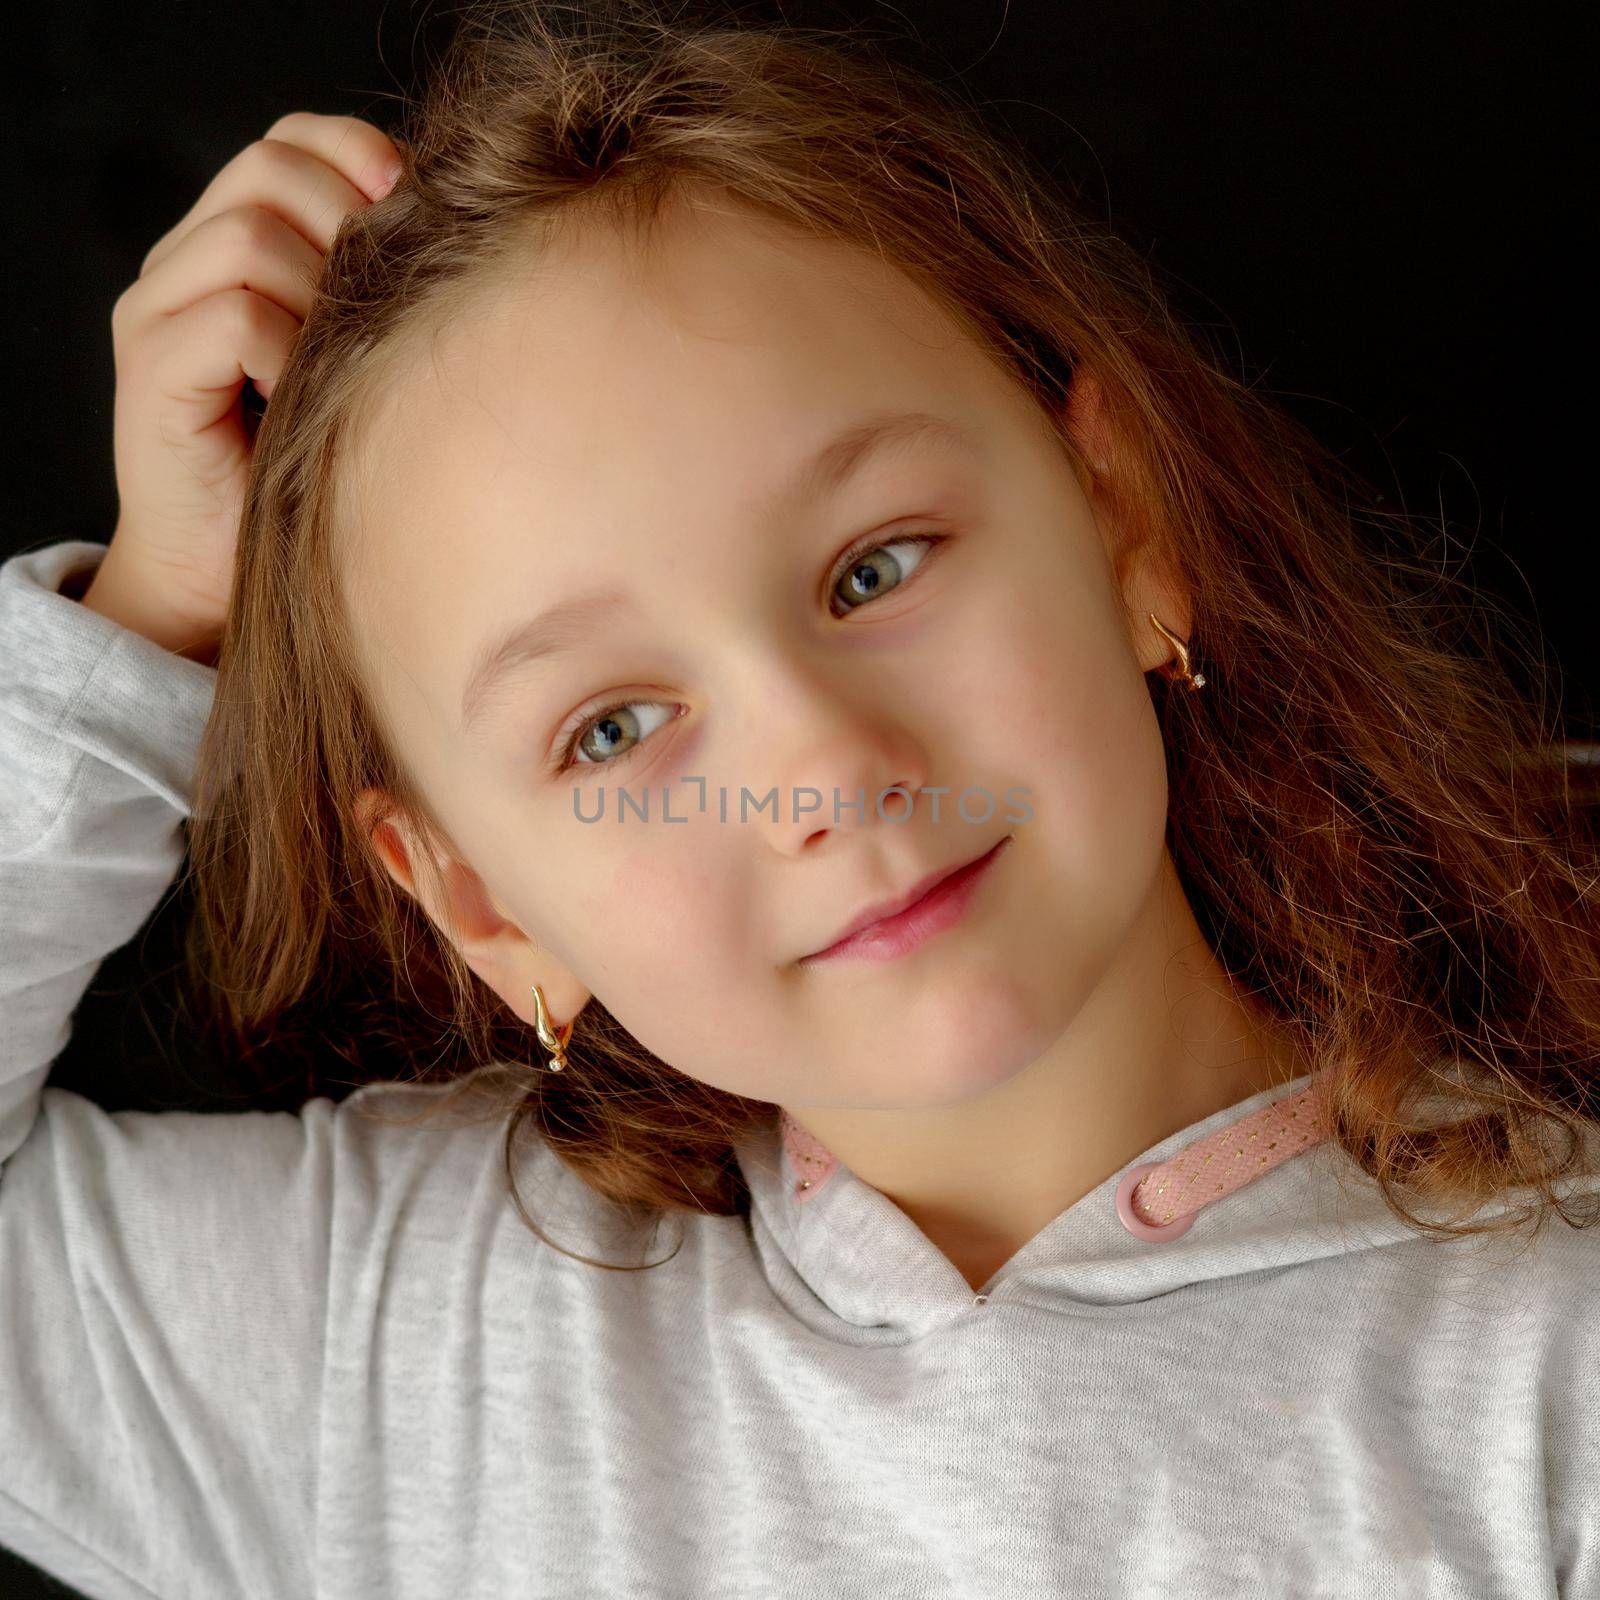 A beautiful little girl straightens her hair on her head. by kolesnikov_studio